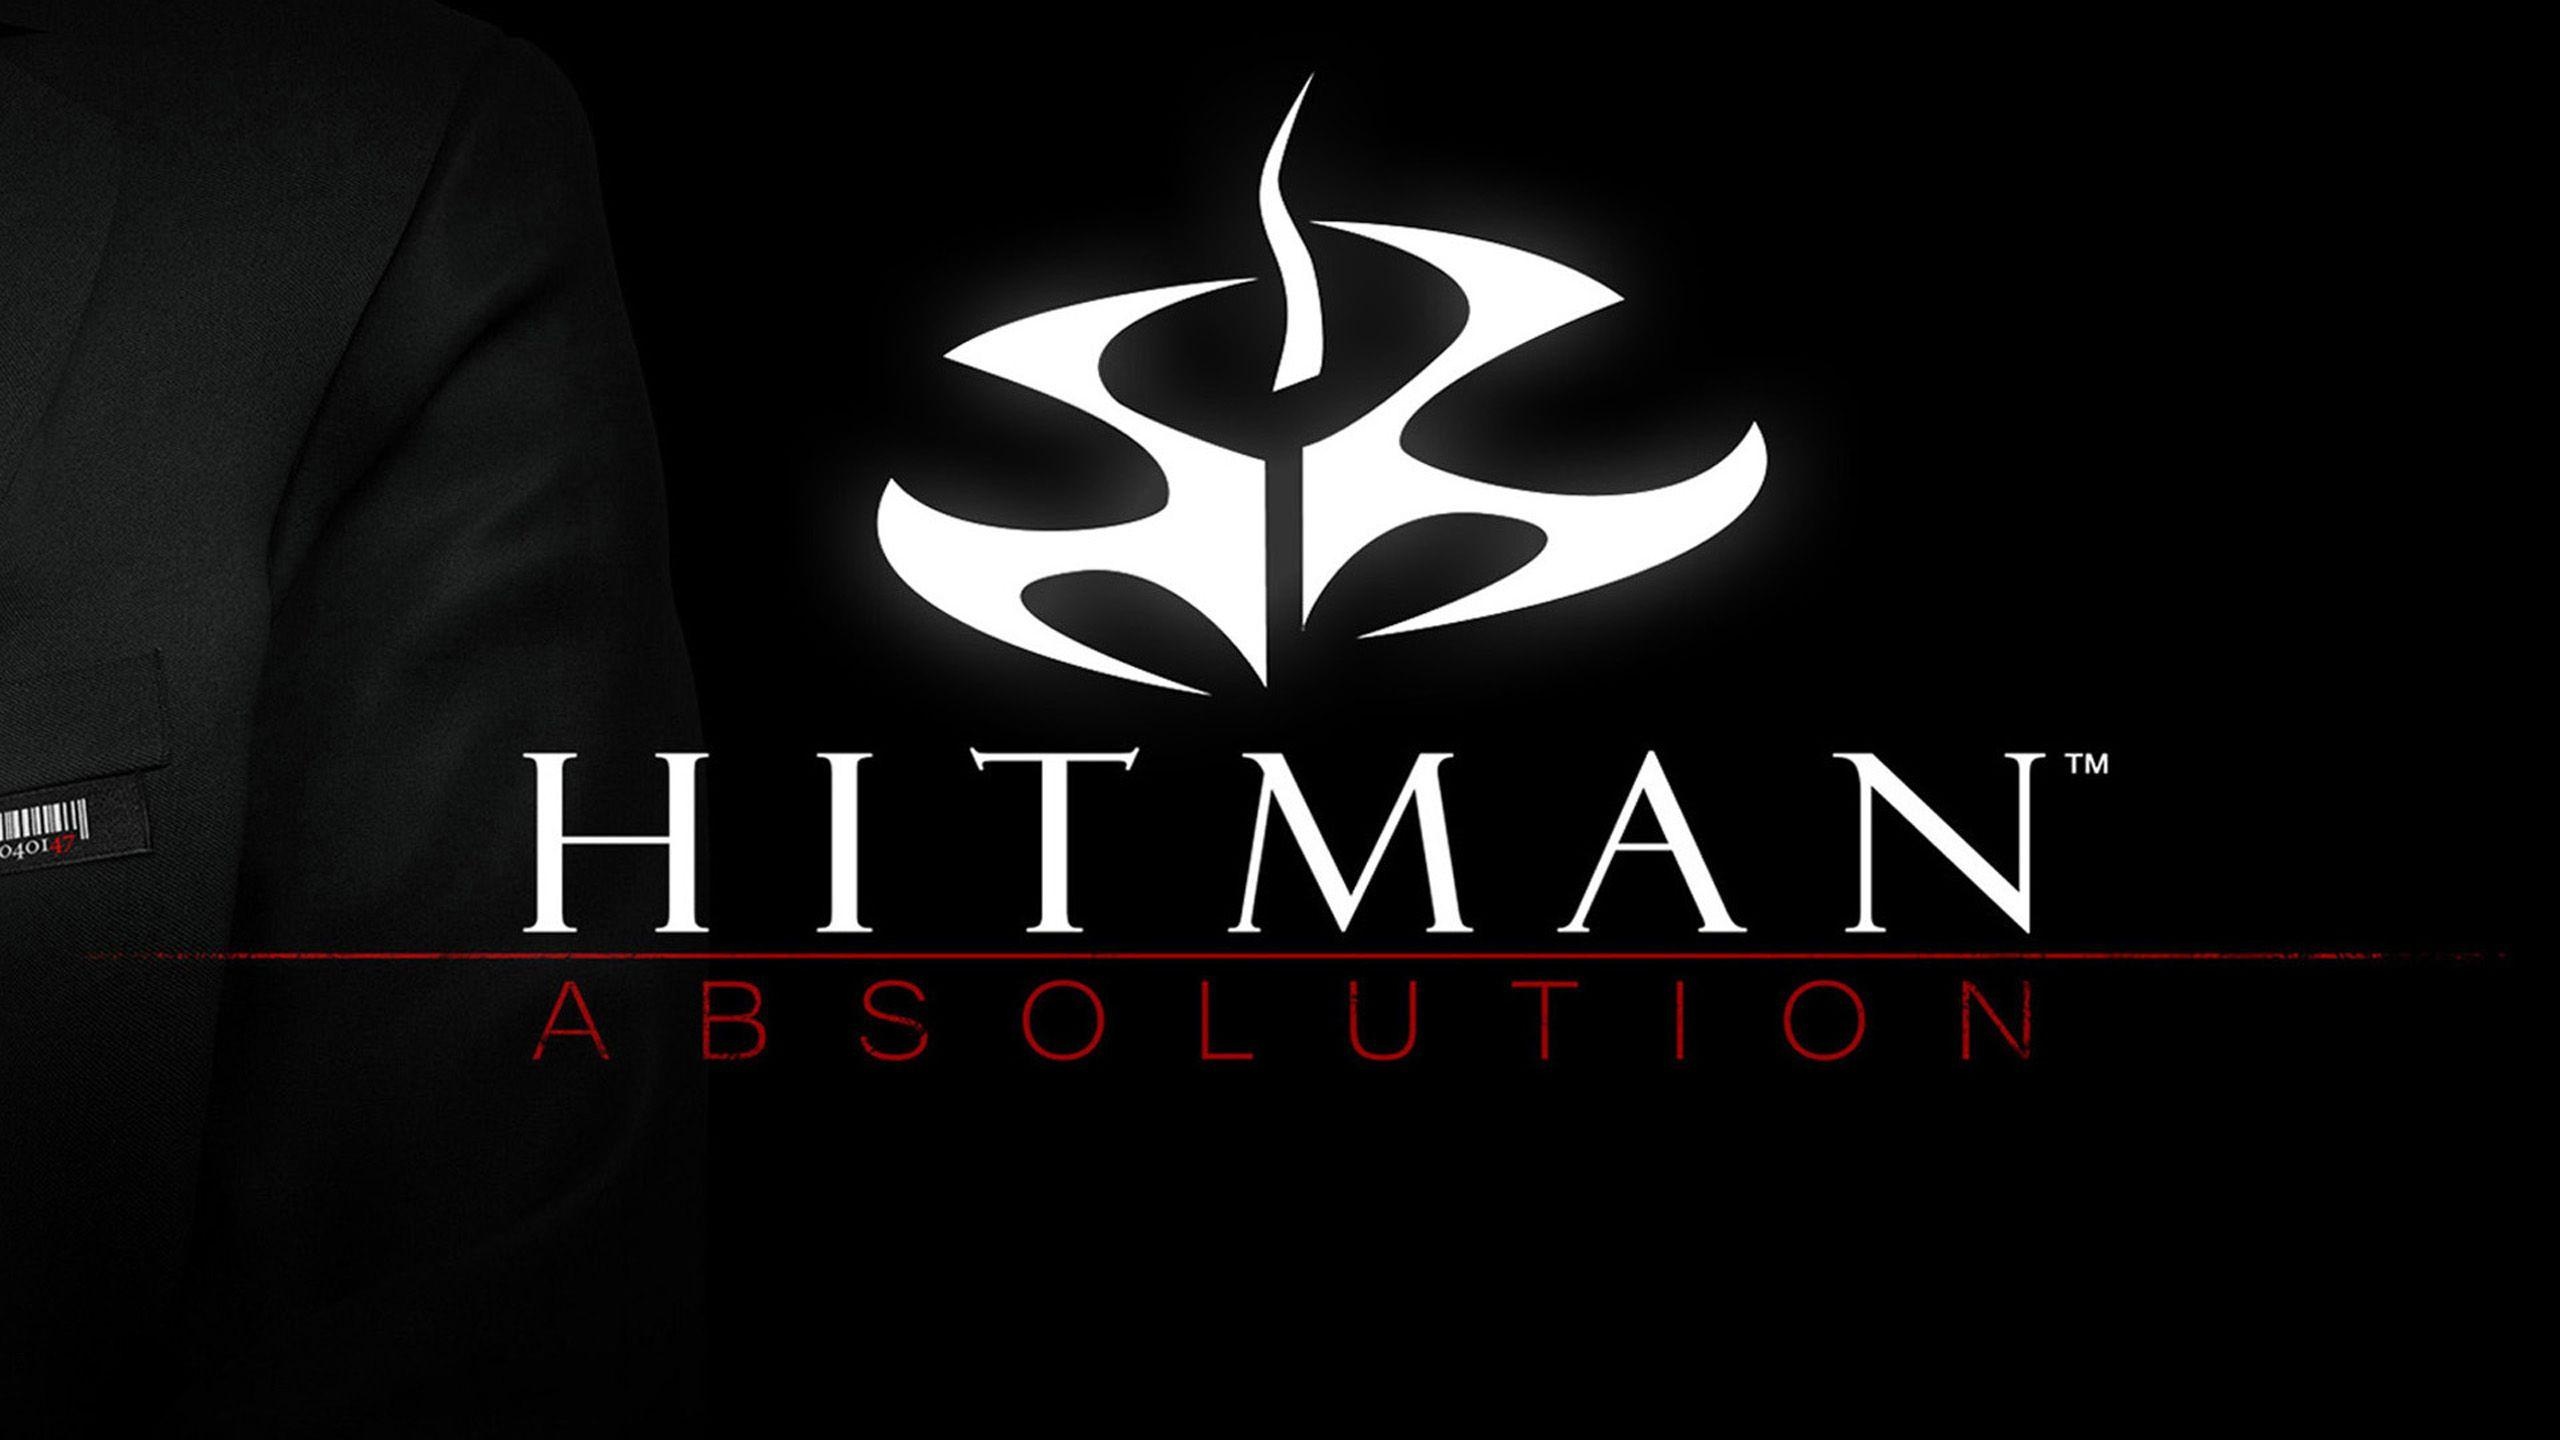 Hitman logo, Stealthy contracts, Elite assassin, Precise marksmanship, 2560x1440 HD Desktop